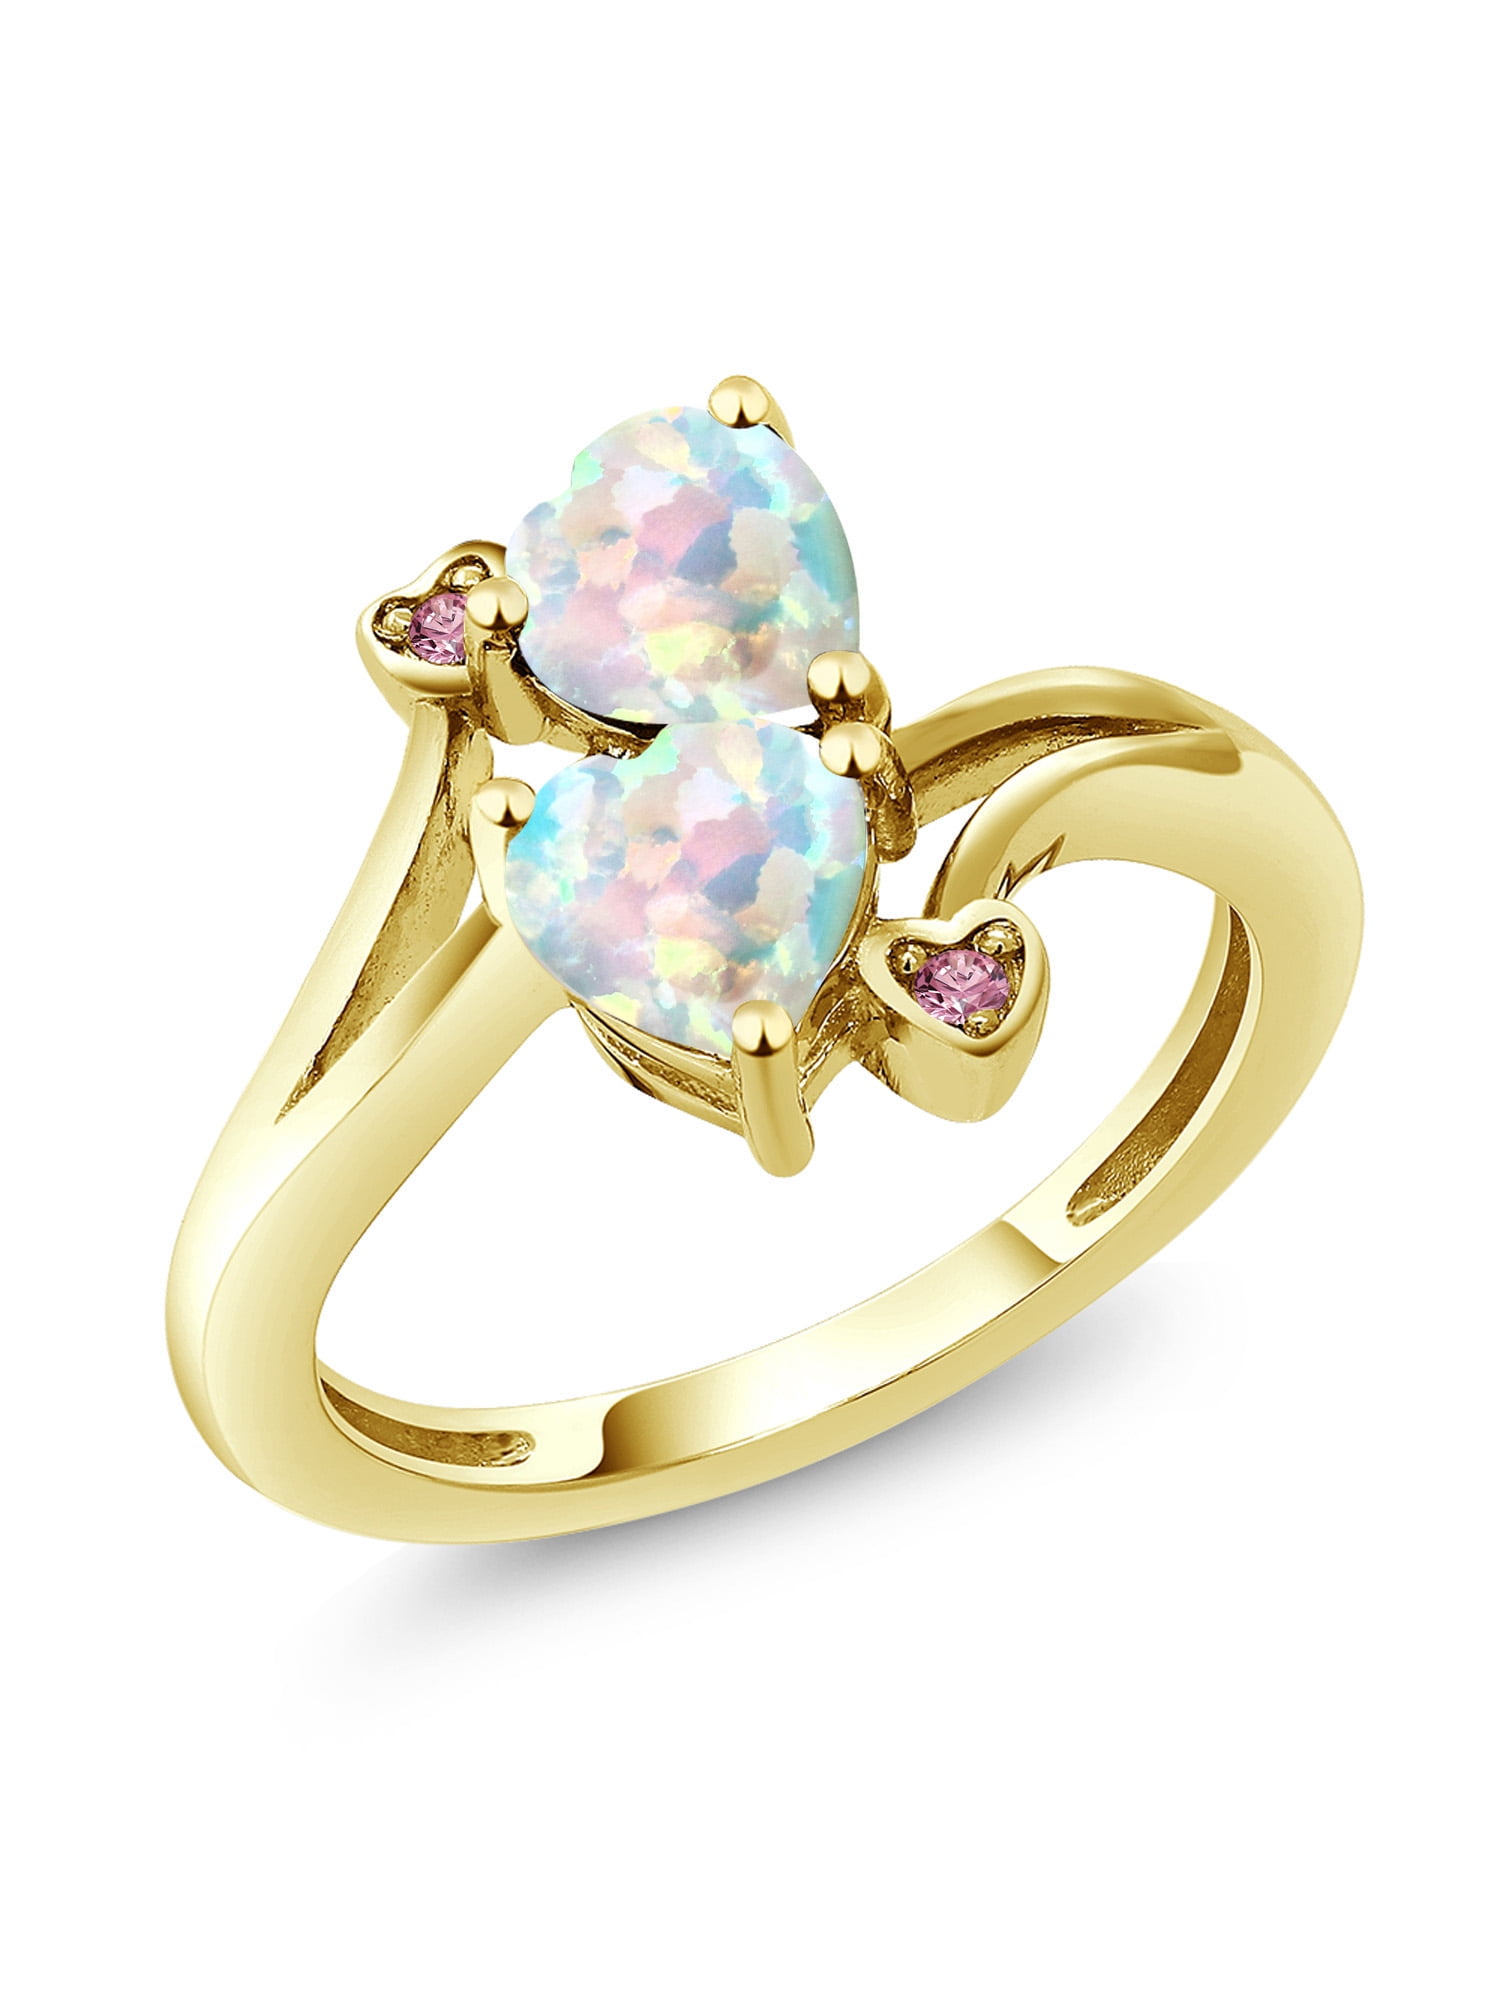 Gem Stone King 1.53 Ct Heart Shape Citrine Blue Created Sapphire 10K White Gold Diamond Ring Available 5,6,7,8,9